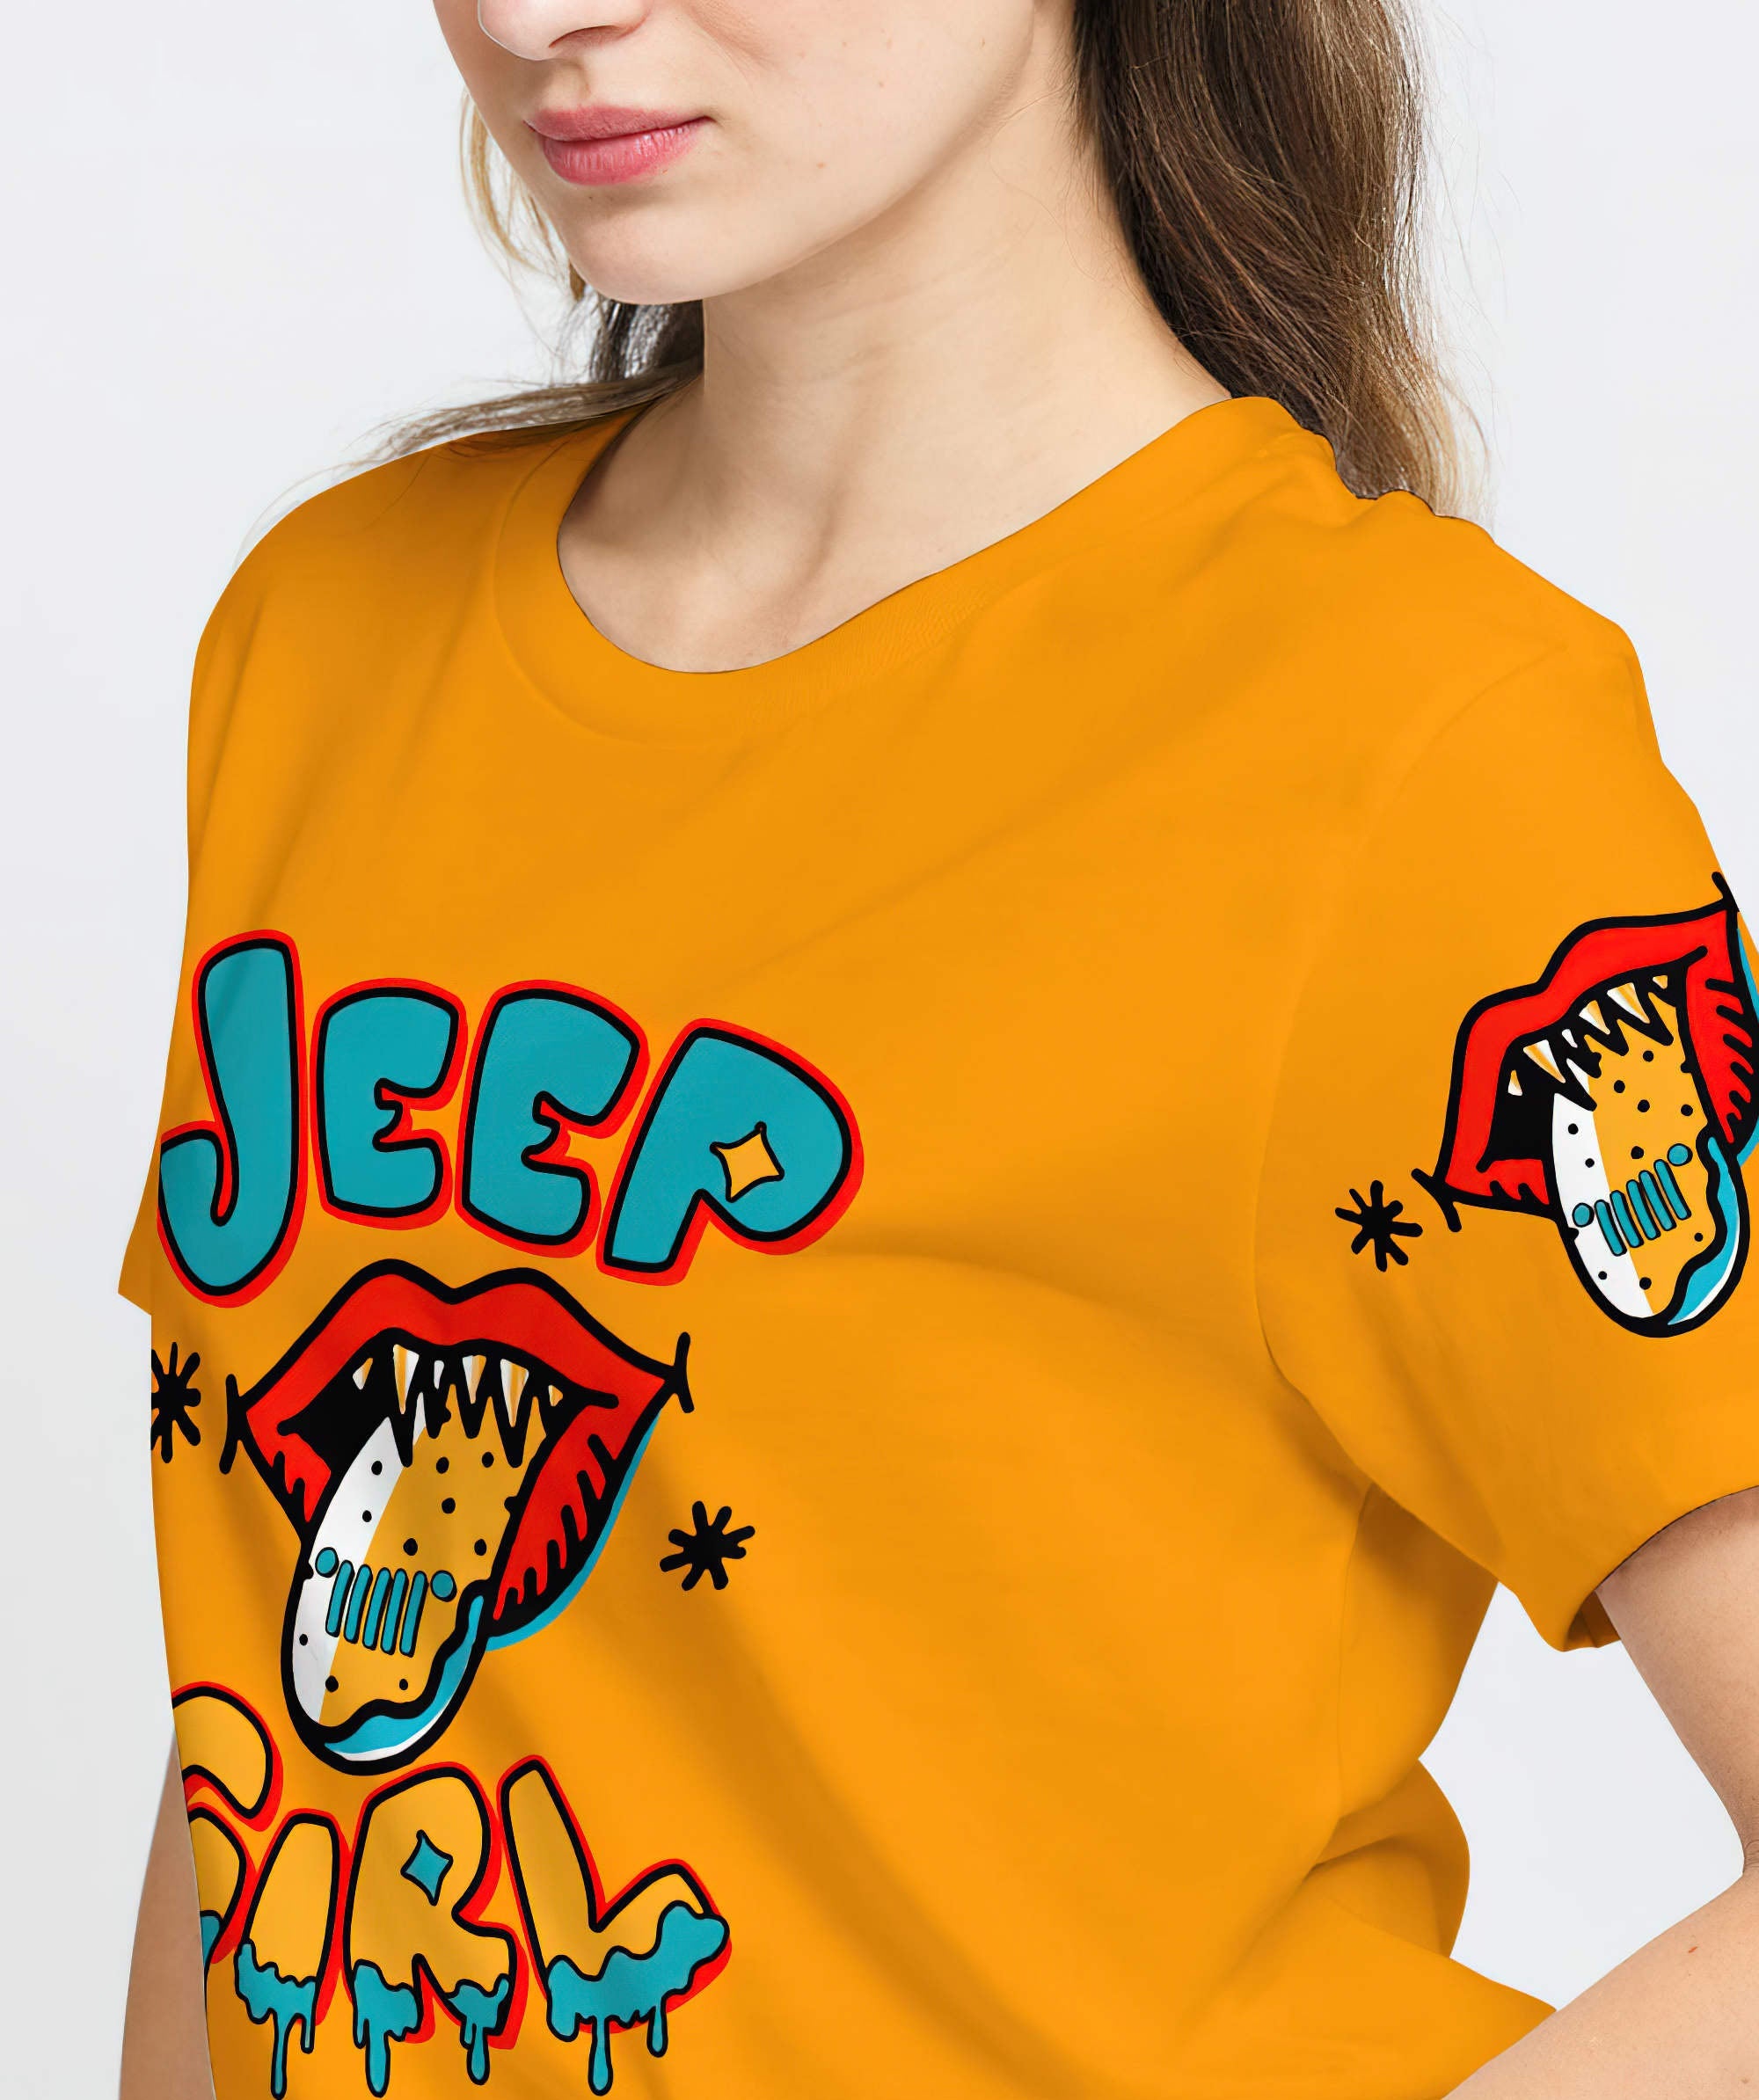 jeep-girl-lips-art-t-shirt